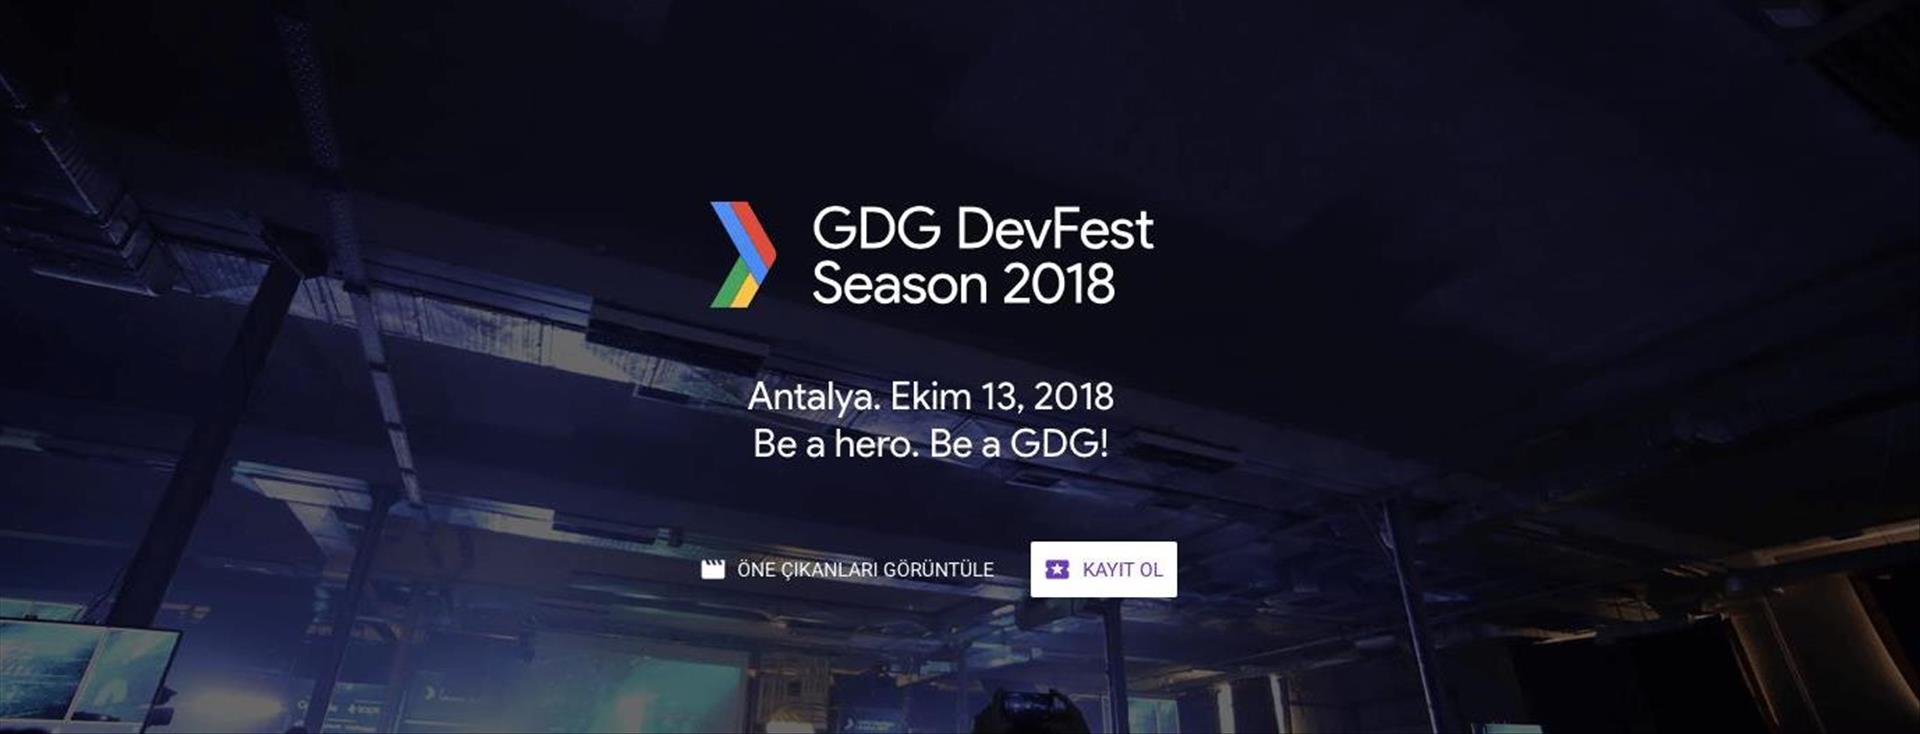 DevFest Antalya 2018 Konferansı, 13 Ekim’de